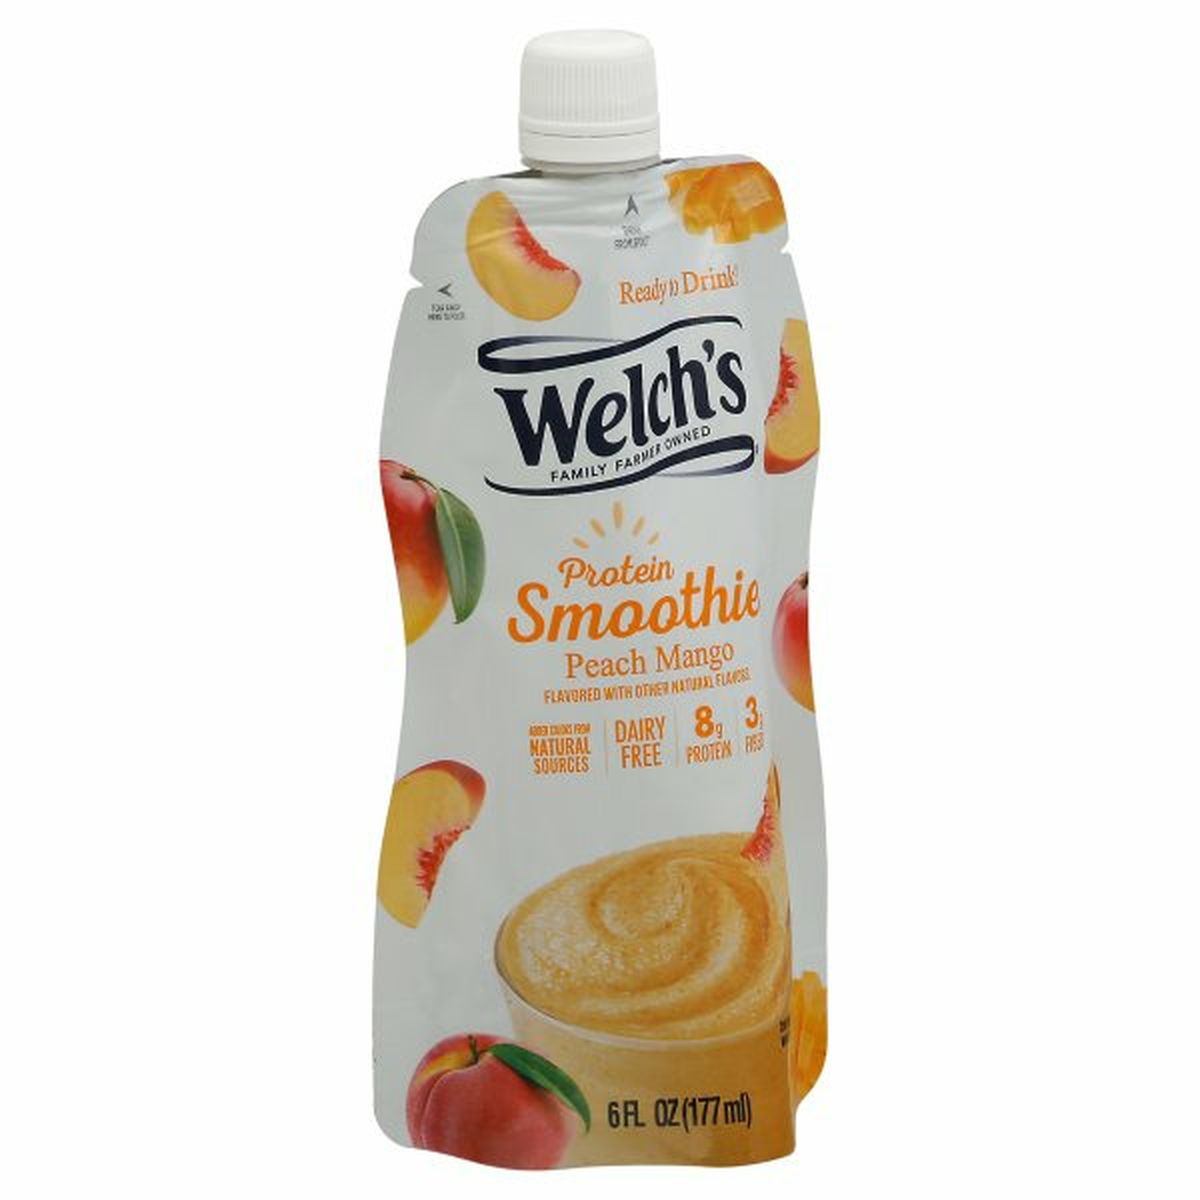 Calories in Welch's Protein Smoothie, Peach Mango